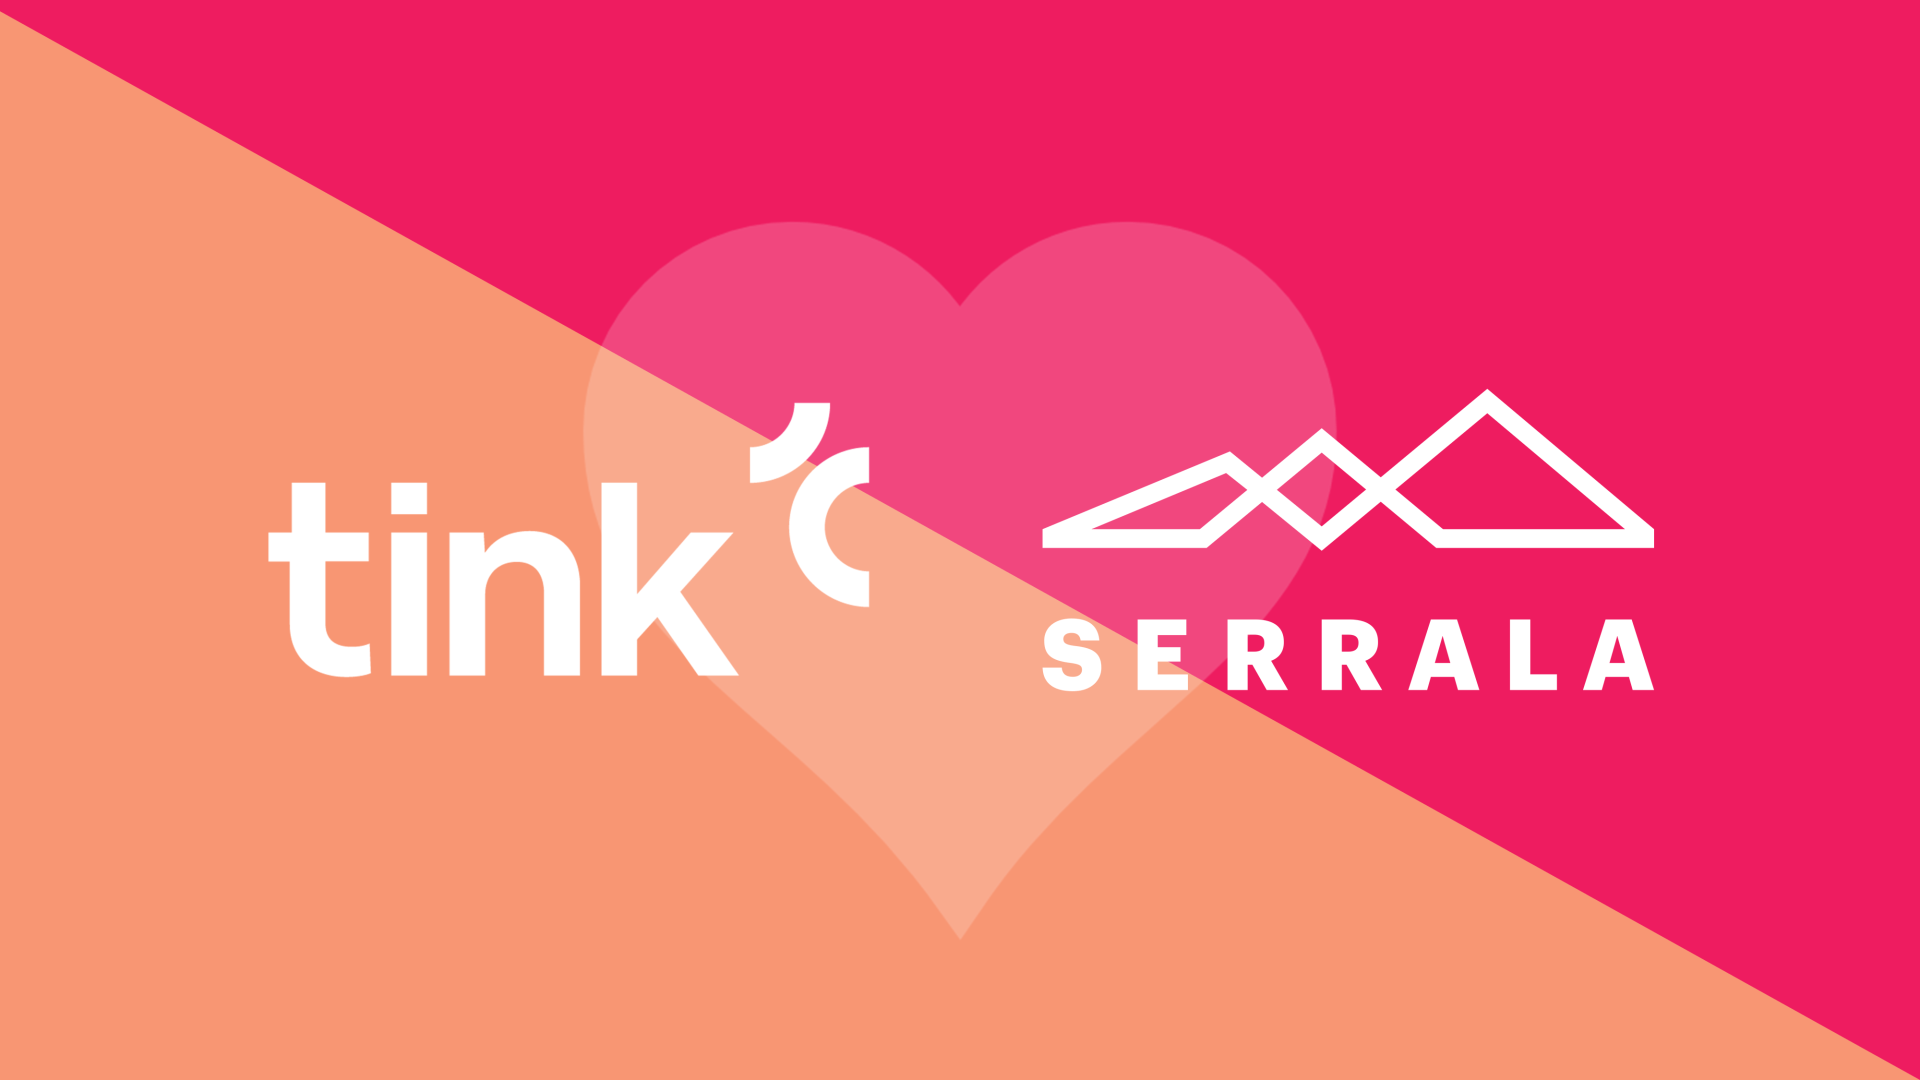 Serrala & Tink Partnership: Genesis of Open Banking in B2B Payments